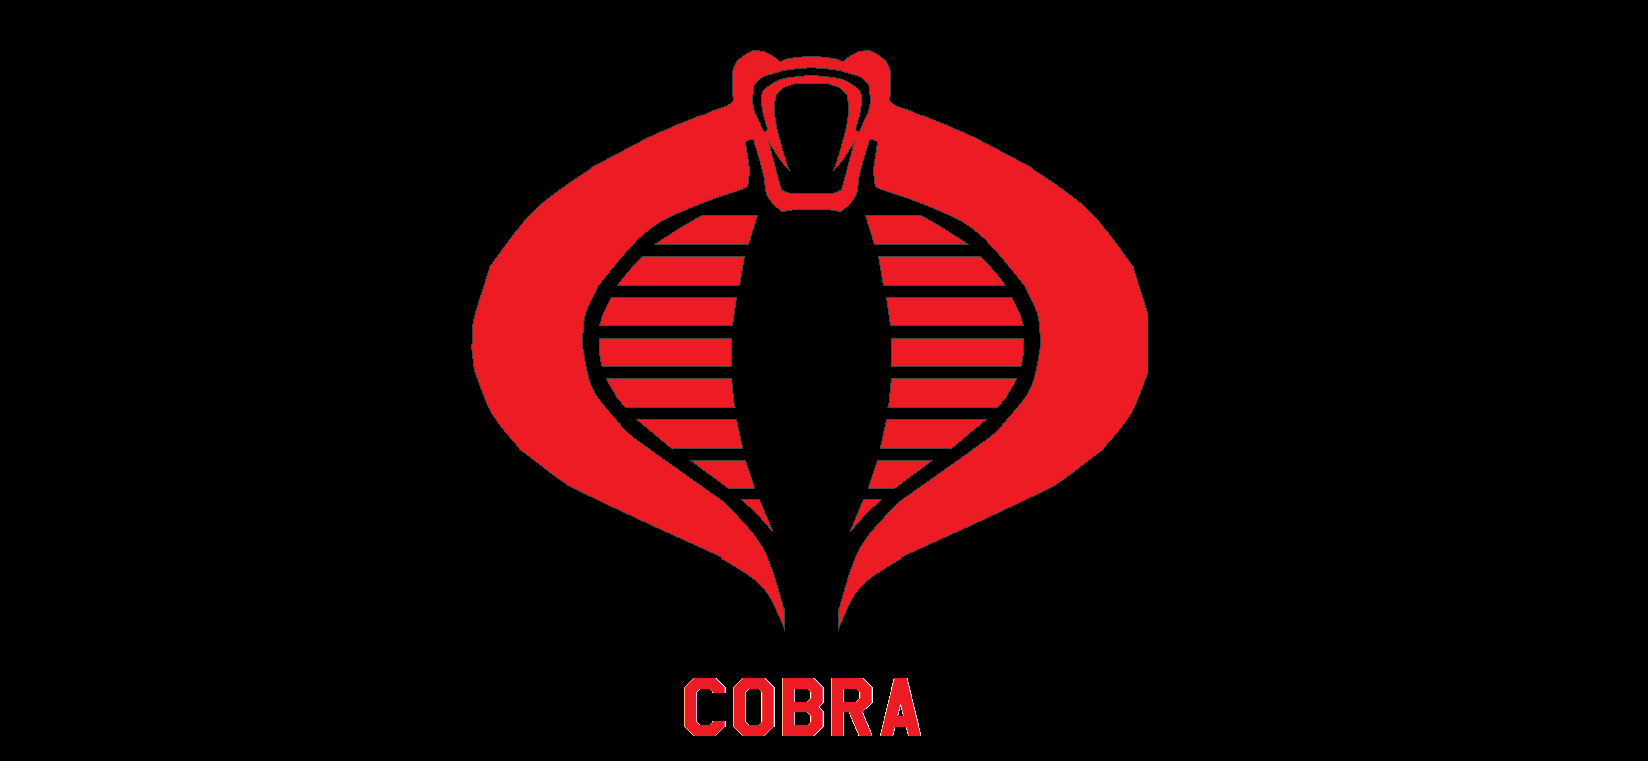 Cobra Golf Wallpaper